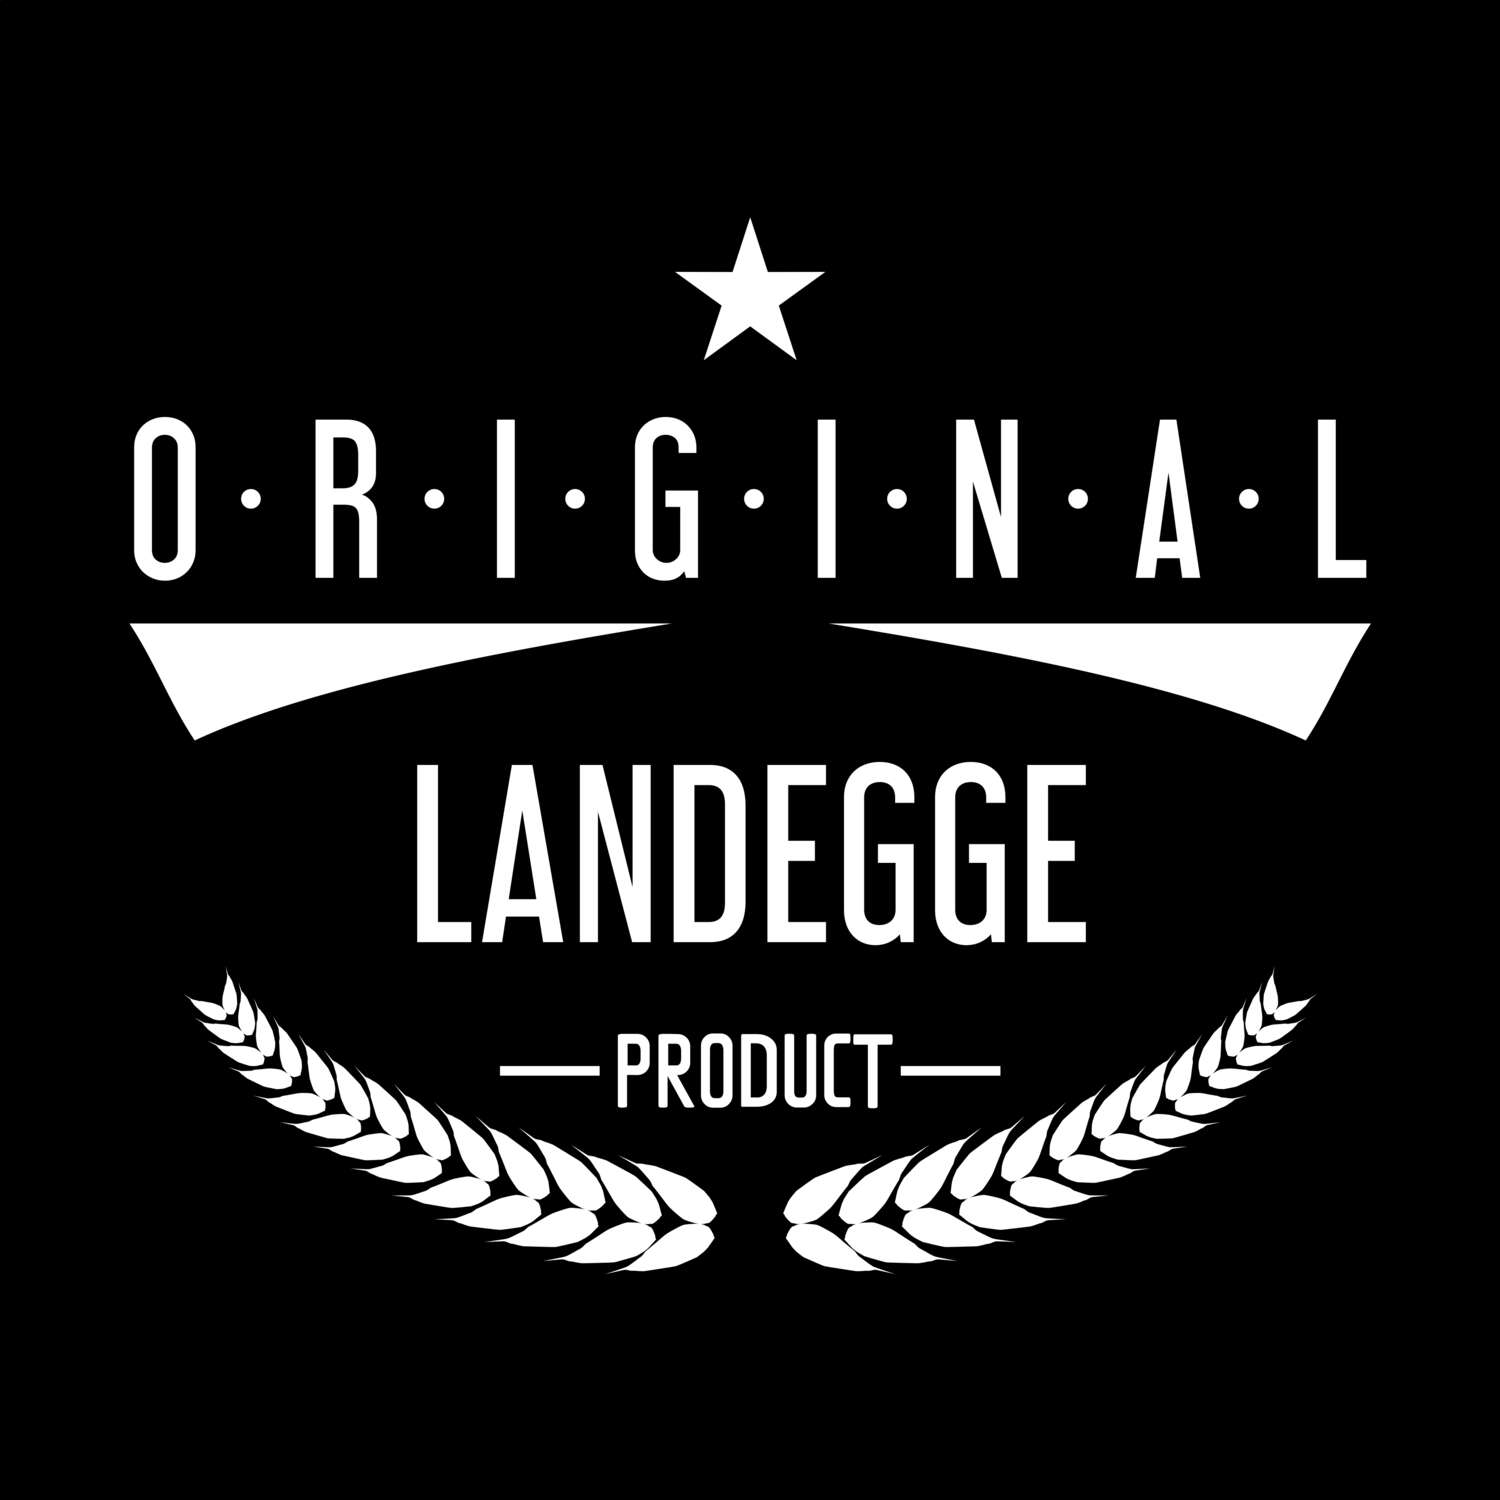 Landegge T-Shirt »Original Product«